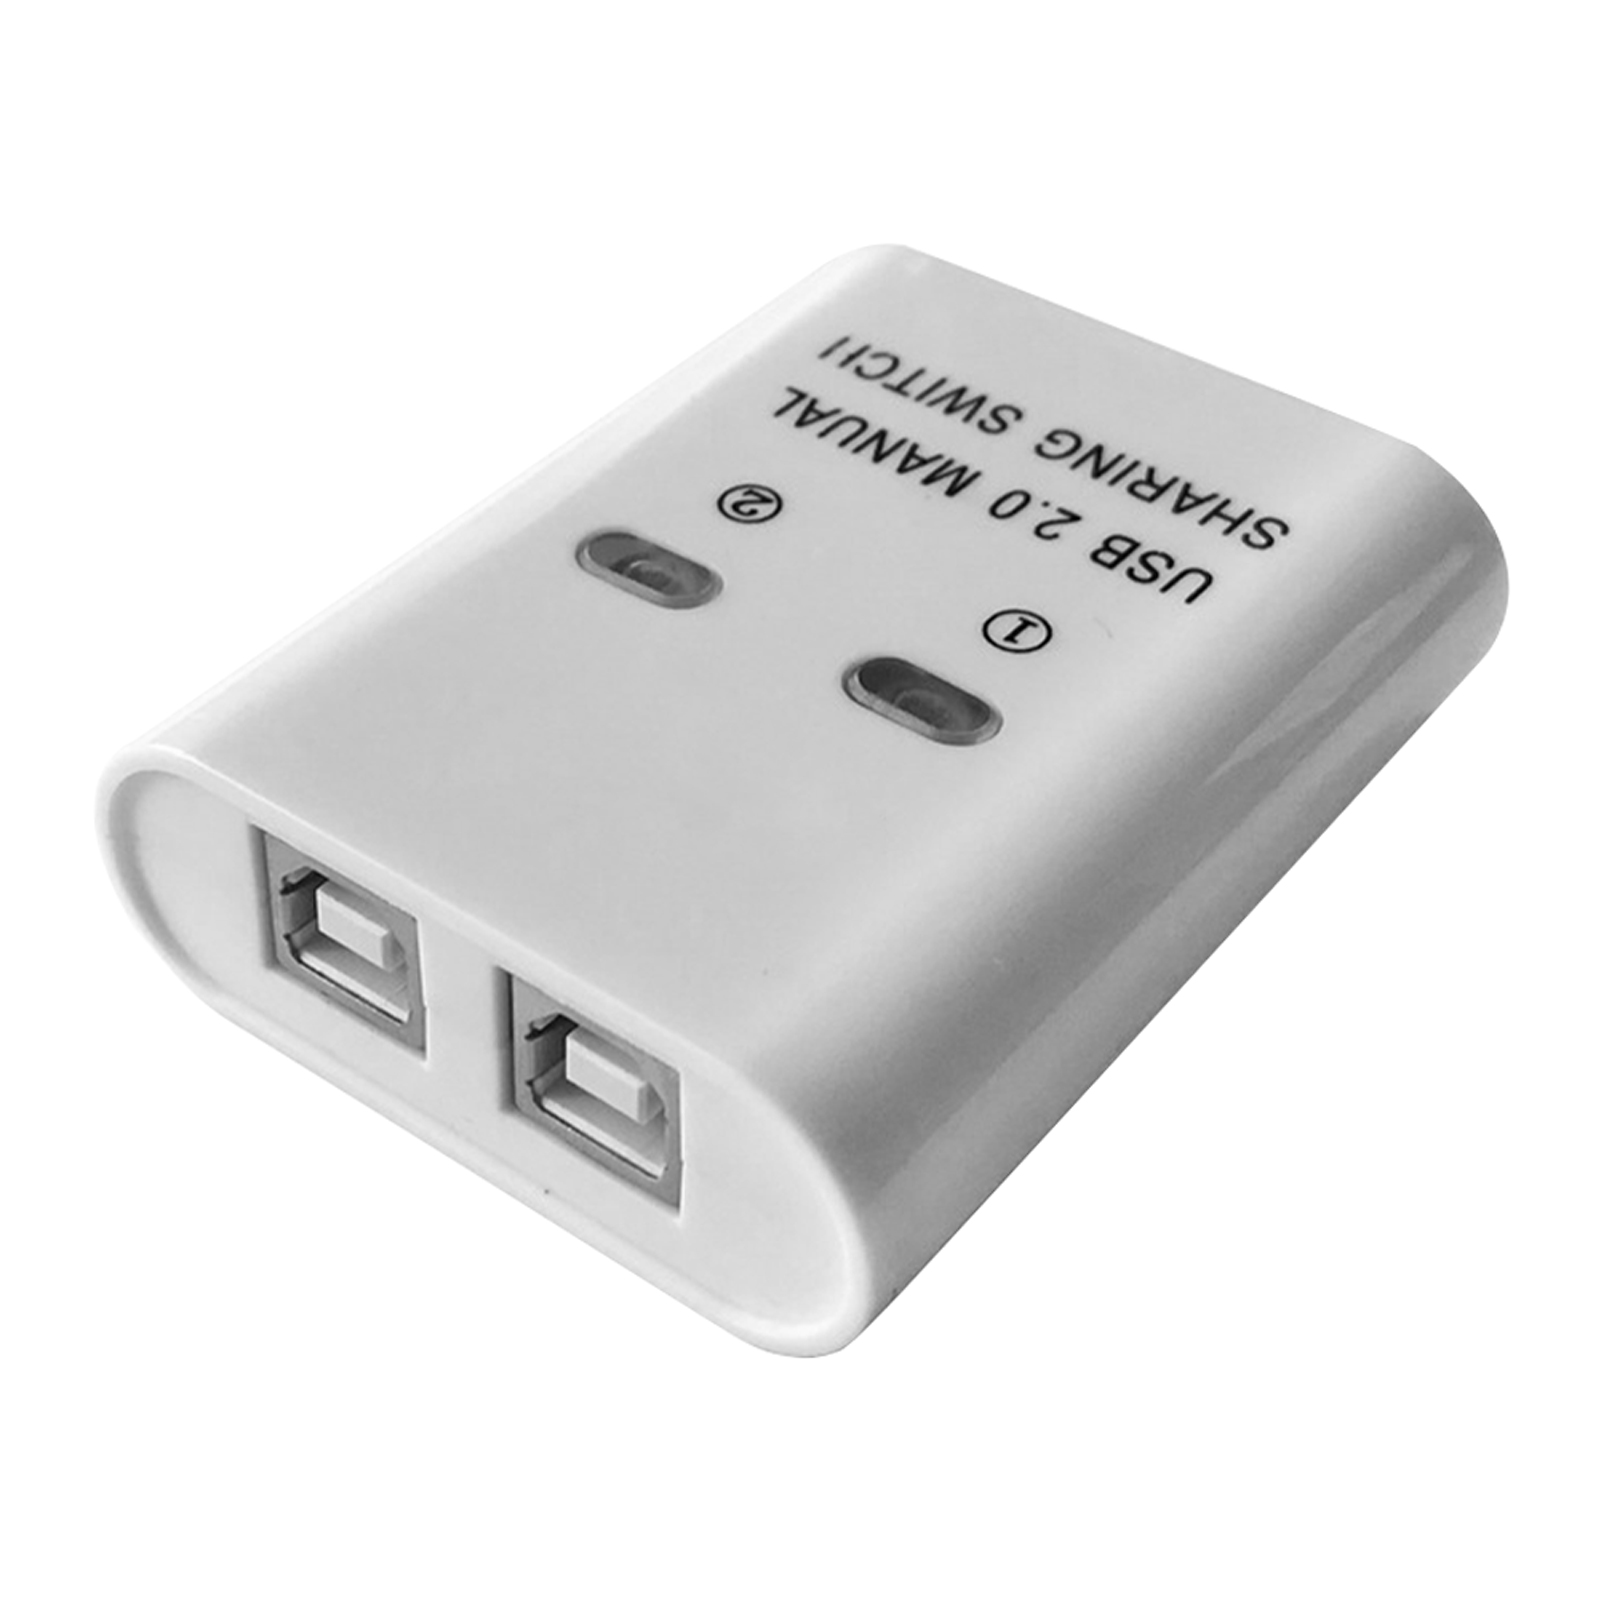 Home Office USB Printer Hub Space Saving 2 Port Plug And Play Portable Long Distance Stable Transmission Splitter Converter